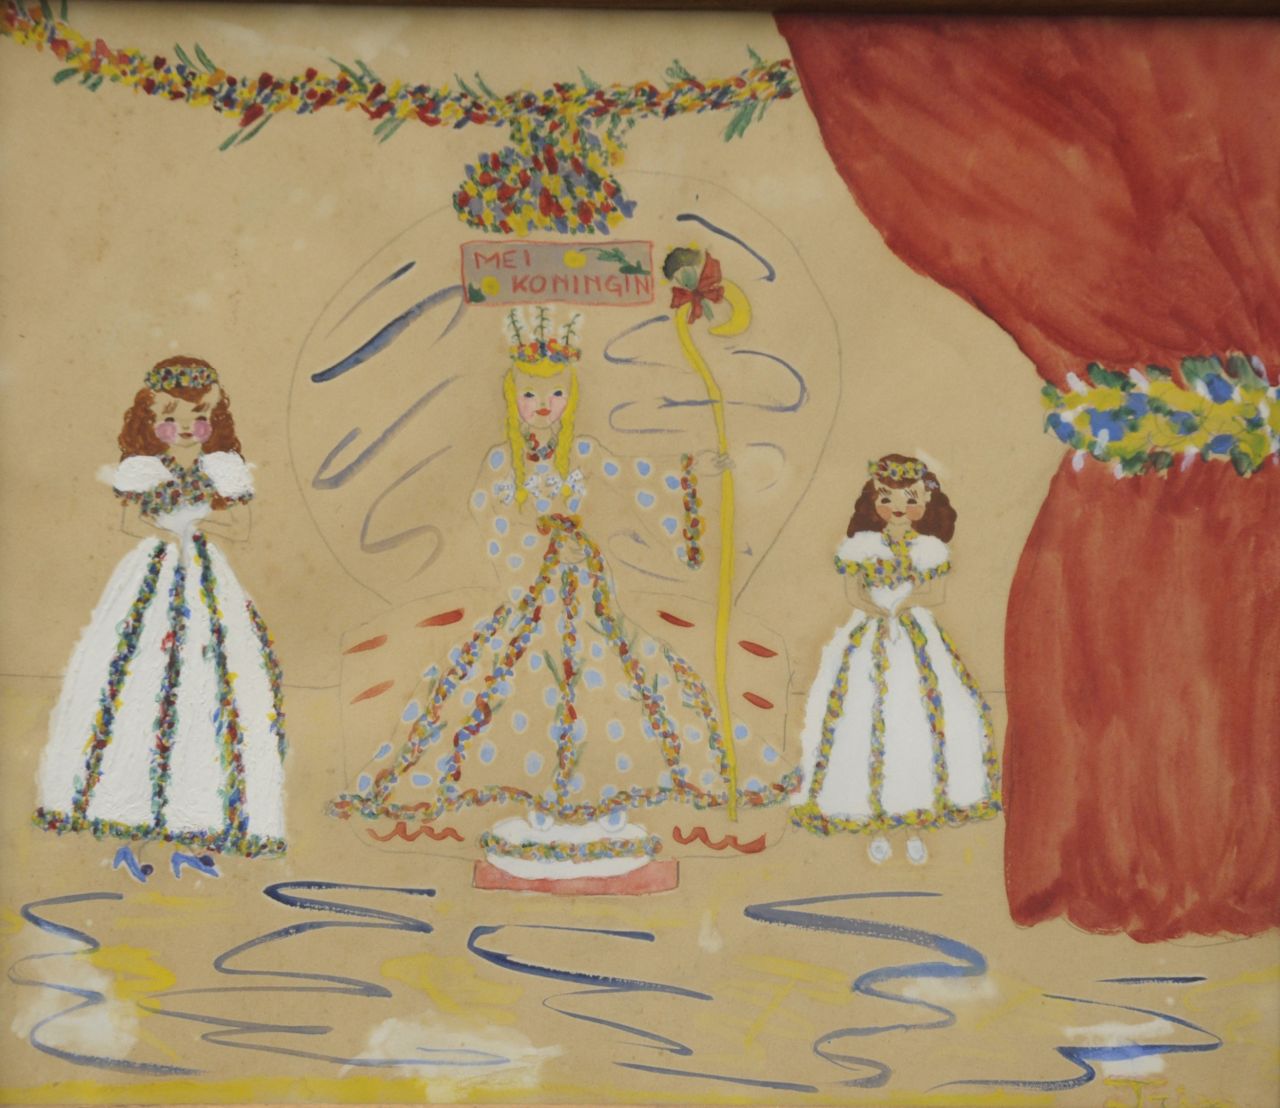 Oranje-Nassau (Prinses Beatrix) B.W.A. van | Beatrix Wilhelmina Armgard van Oranje-Nassau (Prinses Beatrix), Meikoningin, aquarel op papier 30,0 x 37,7 cm, gesigneerd m.b.